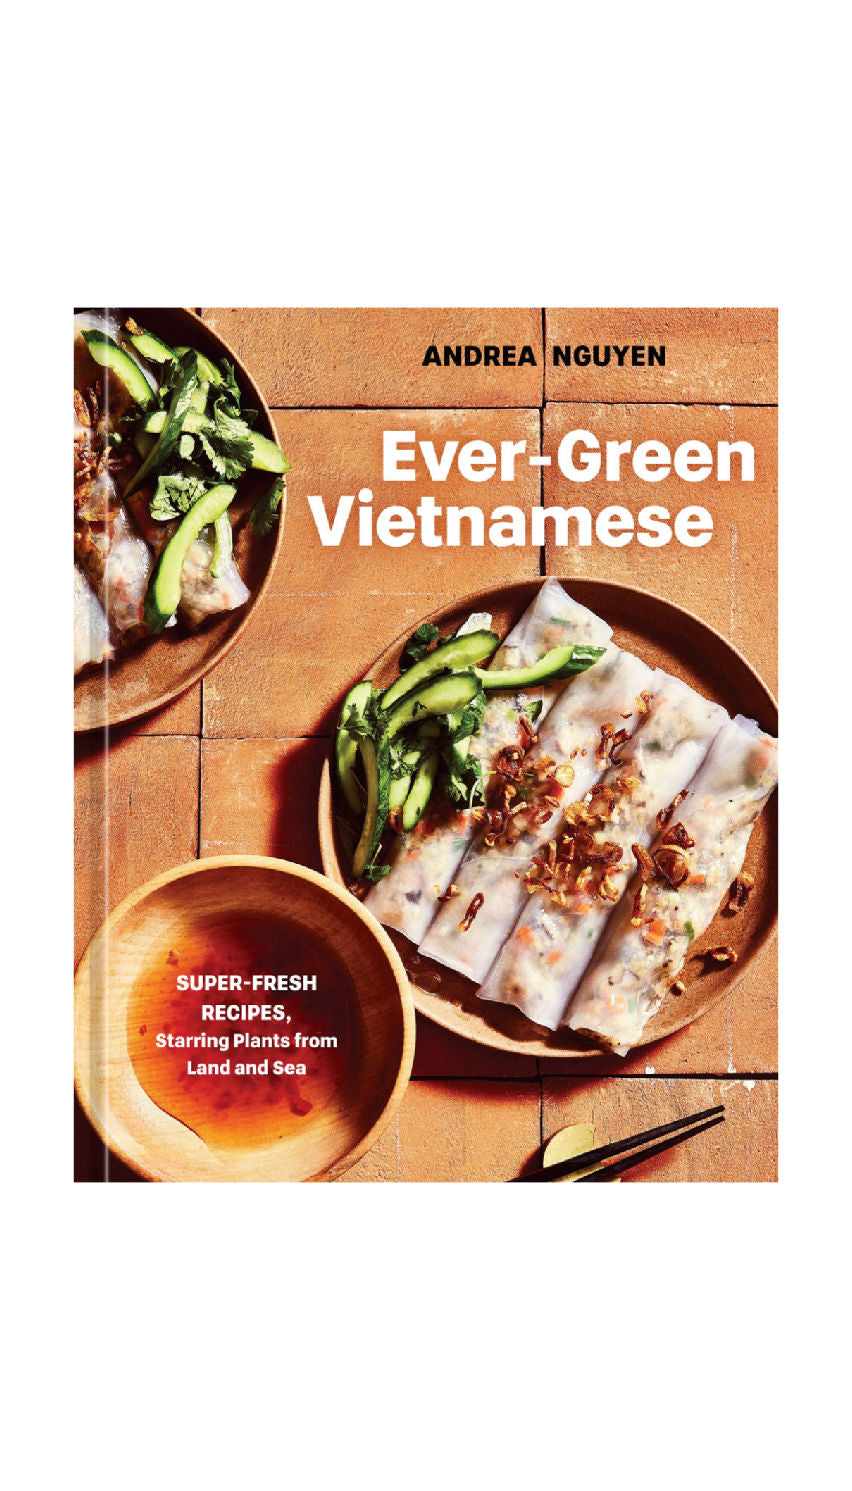 Ever-Green Vietnamese / ANDREA NGUYEN